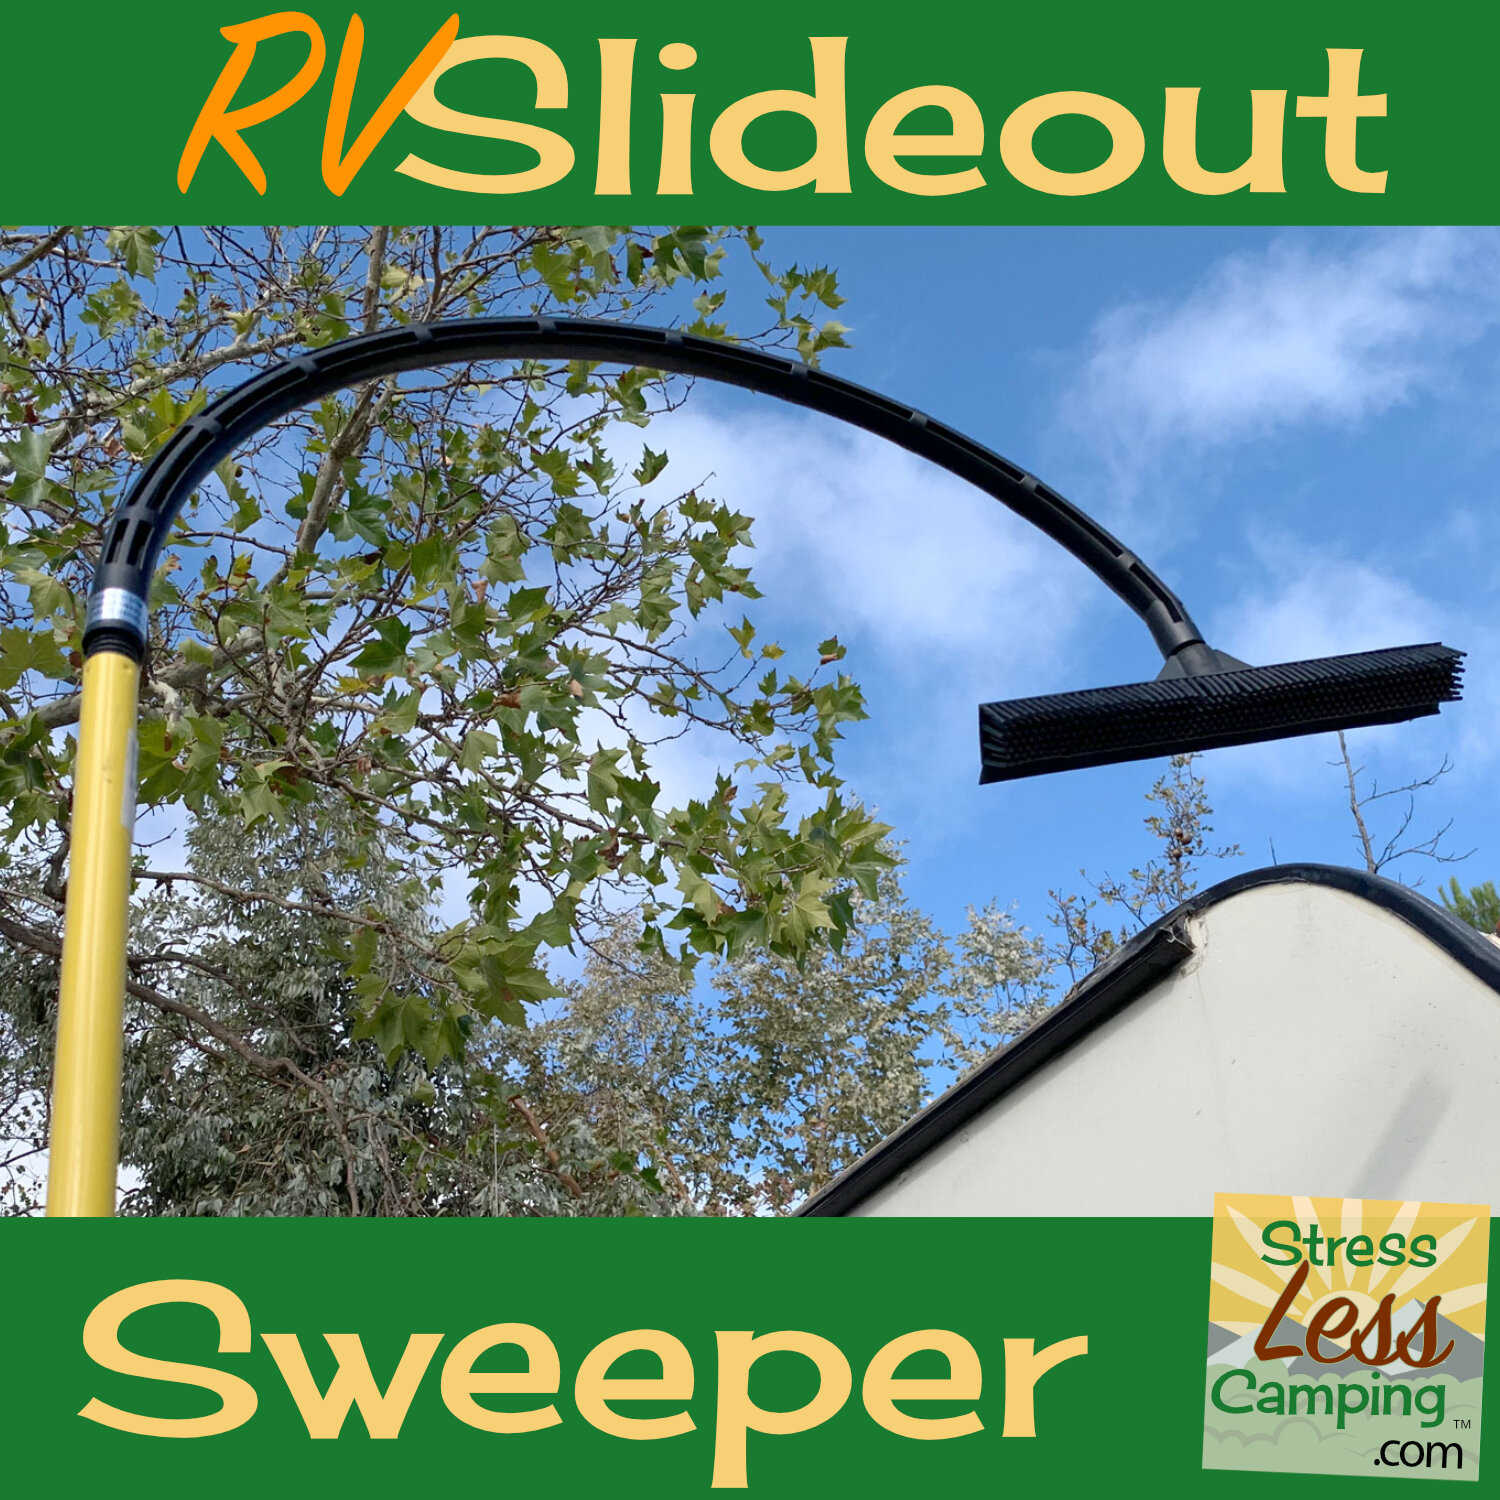 RV Slideout Sweeper hero